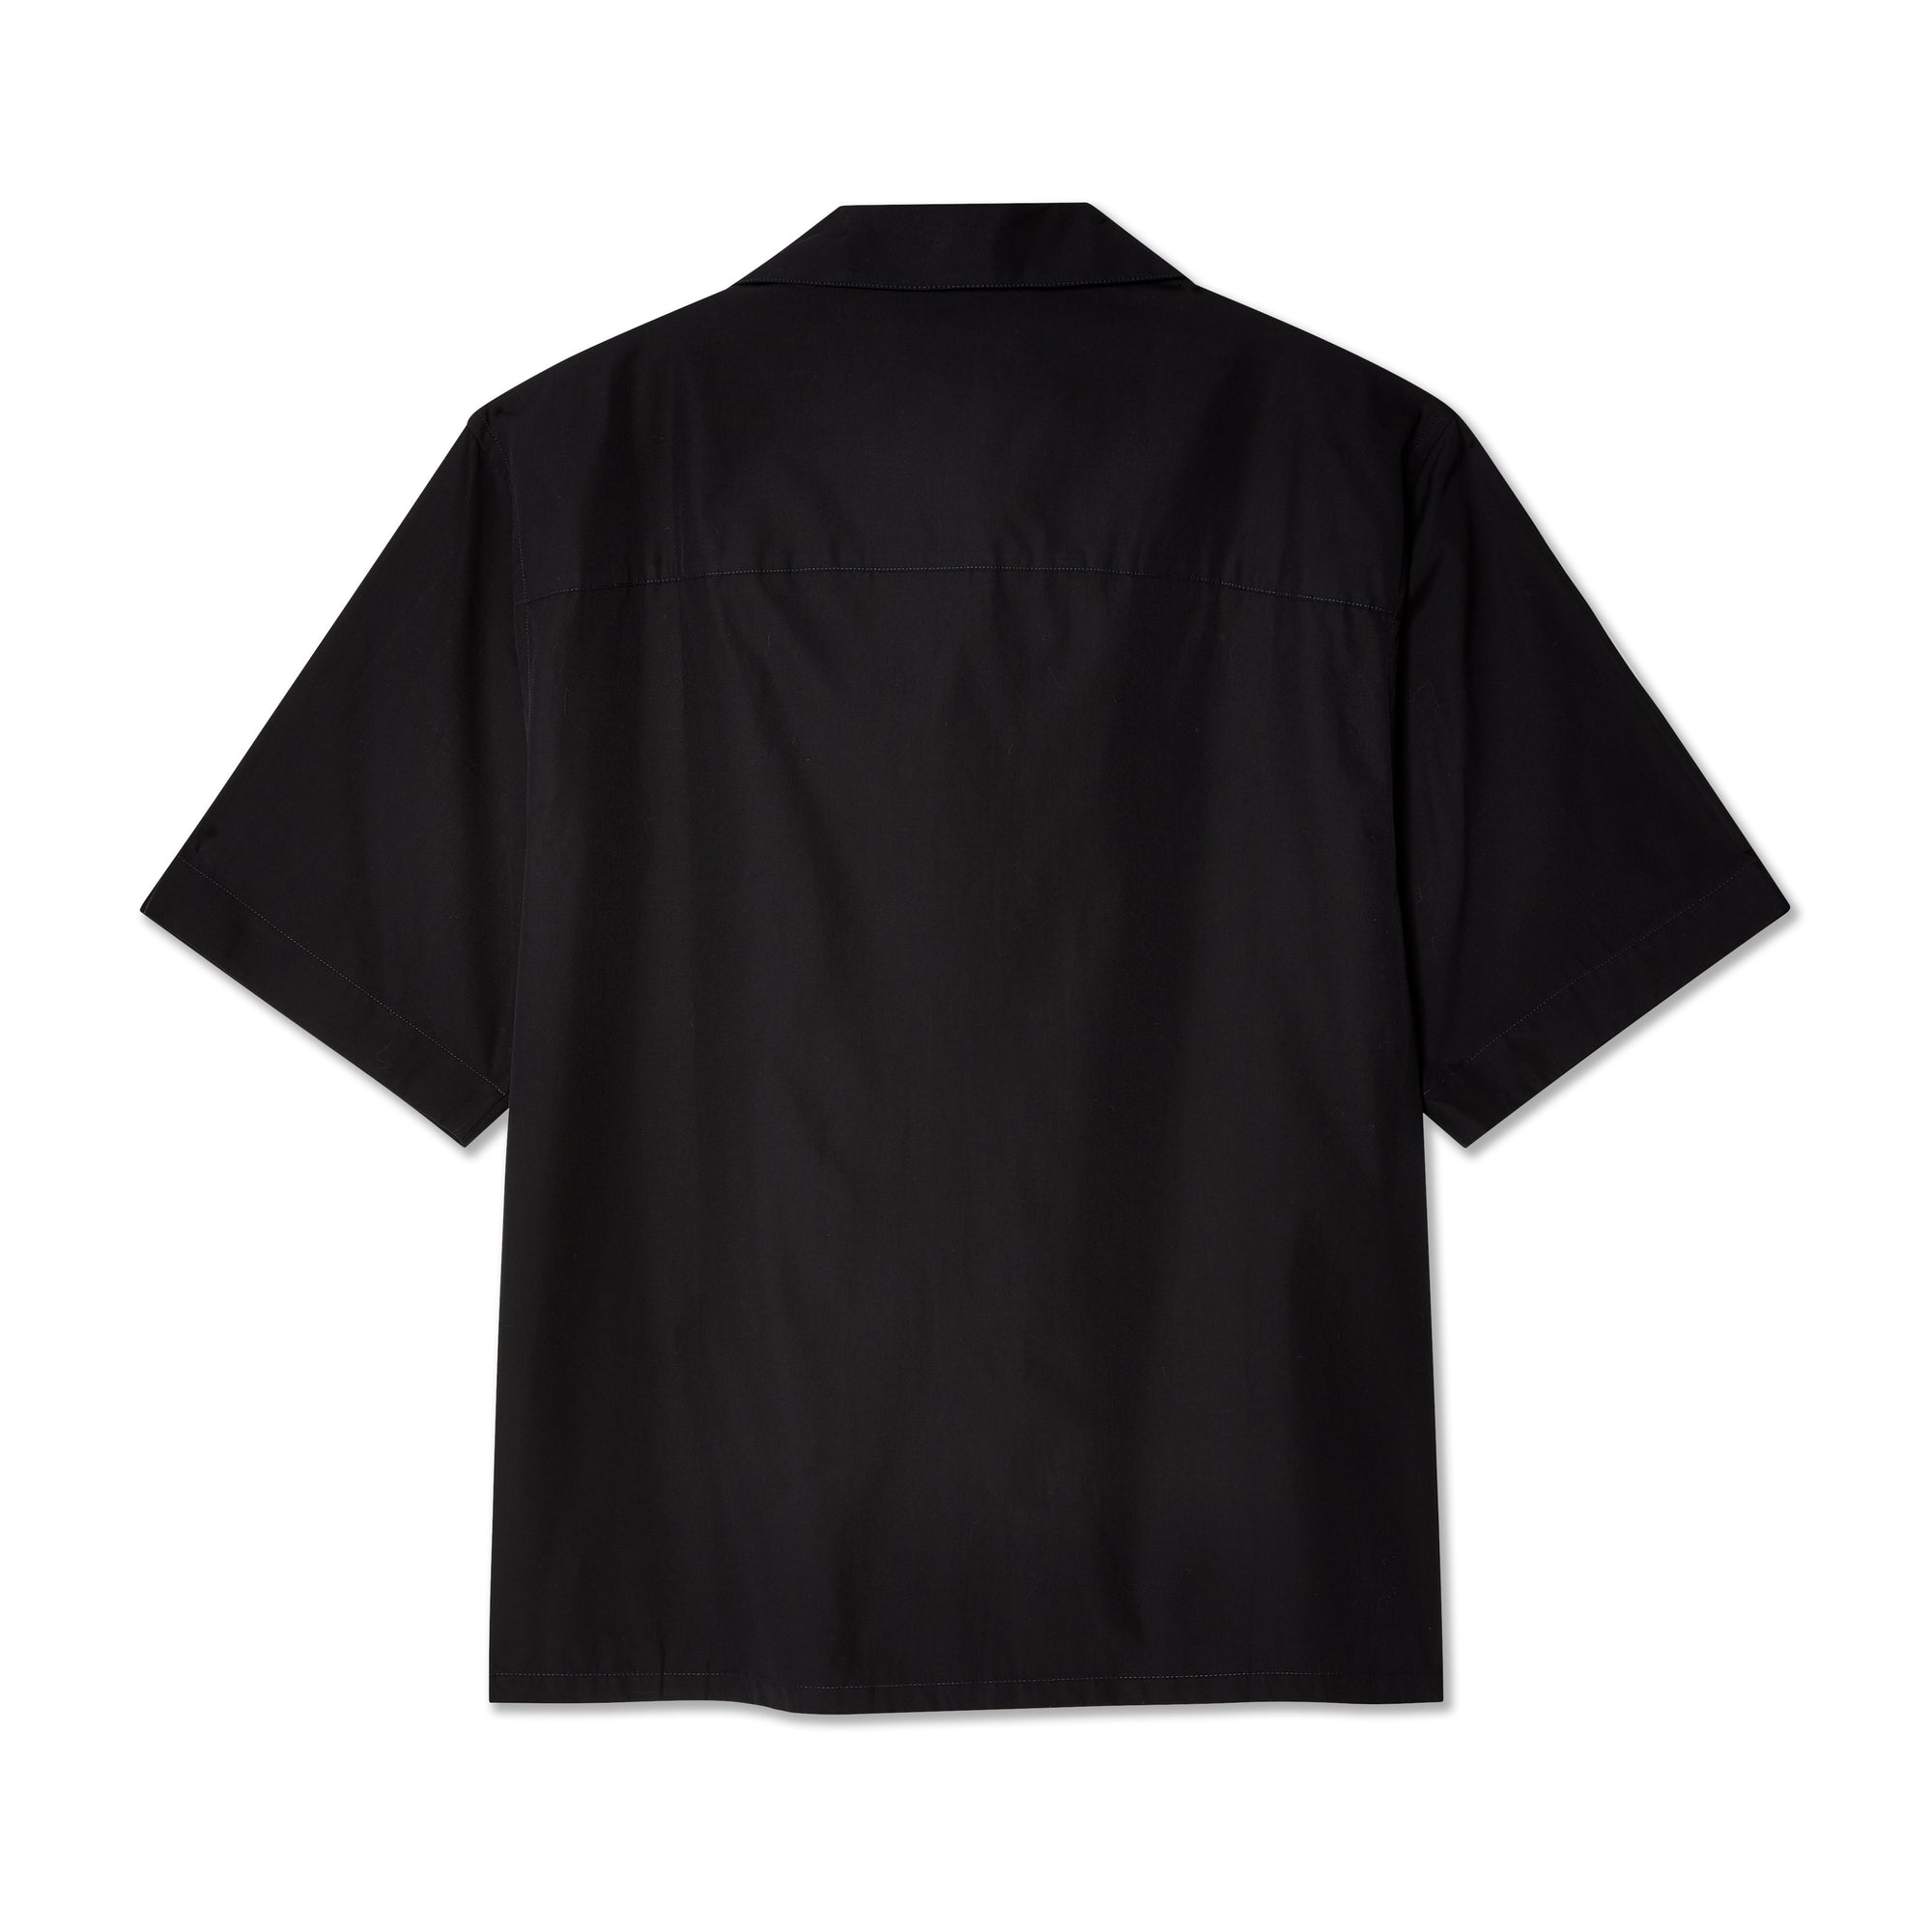 Men's Shirt Black